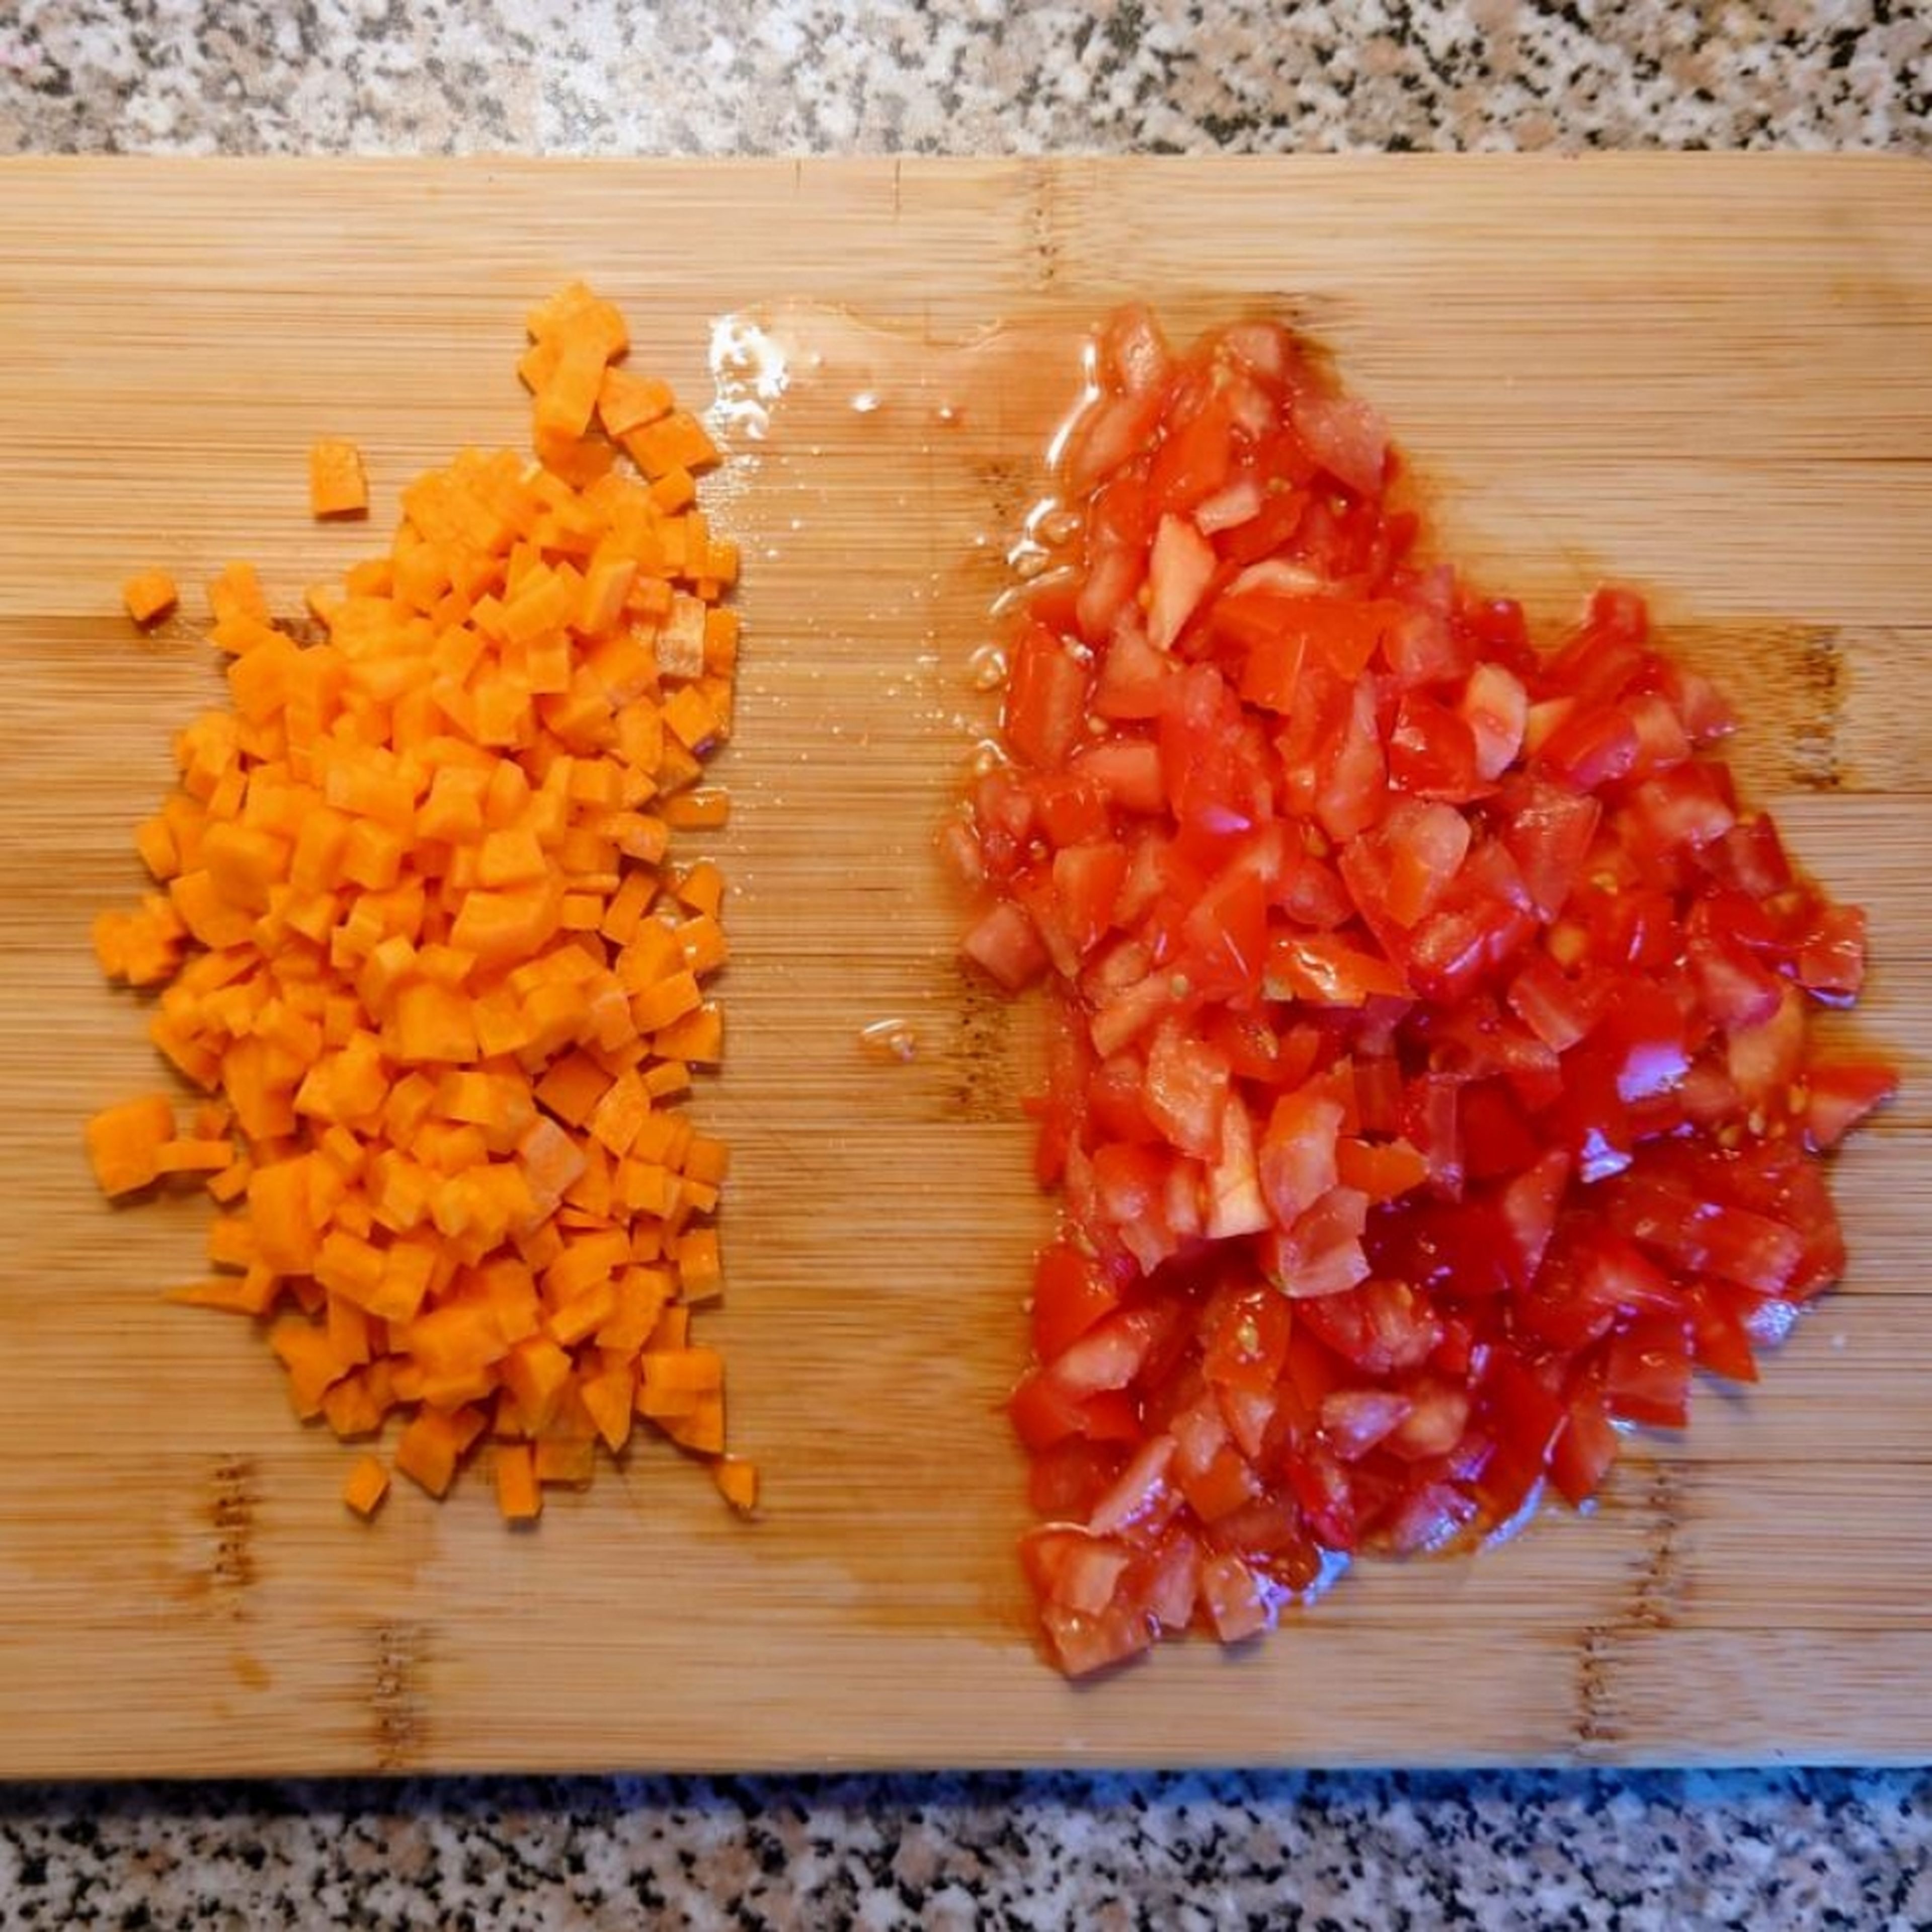 Die 2 Tomaten in grobe Würfel schneiden. Die Karotte fein würfeln.